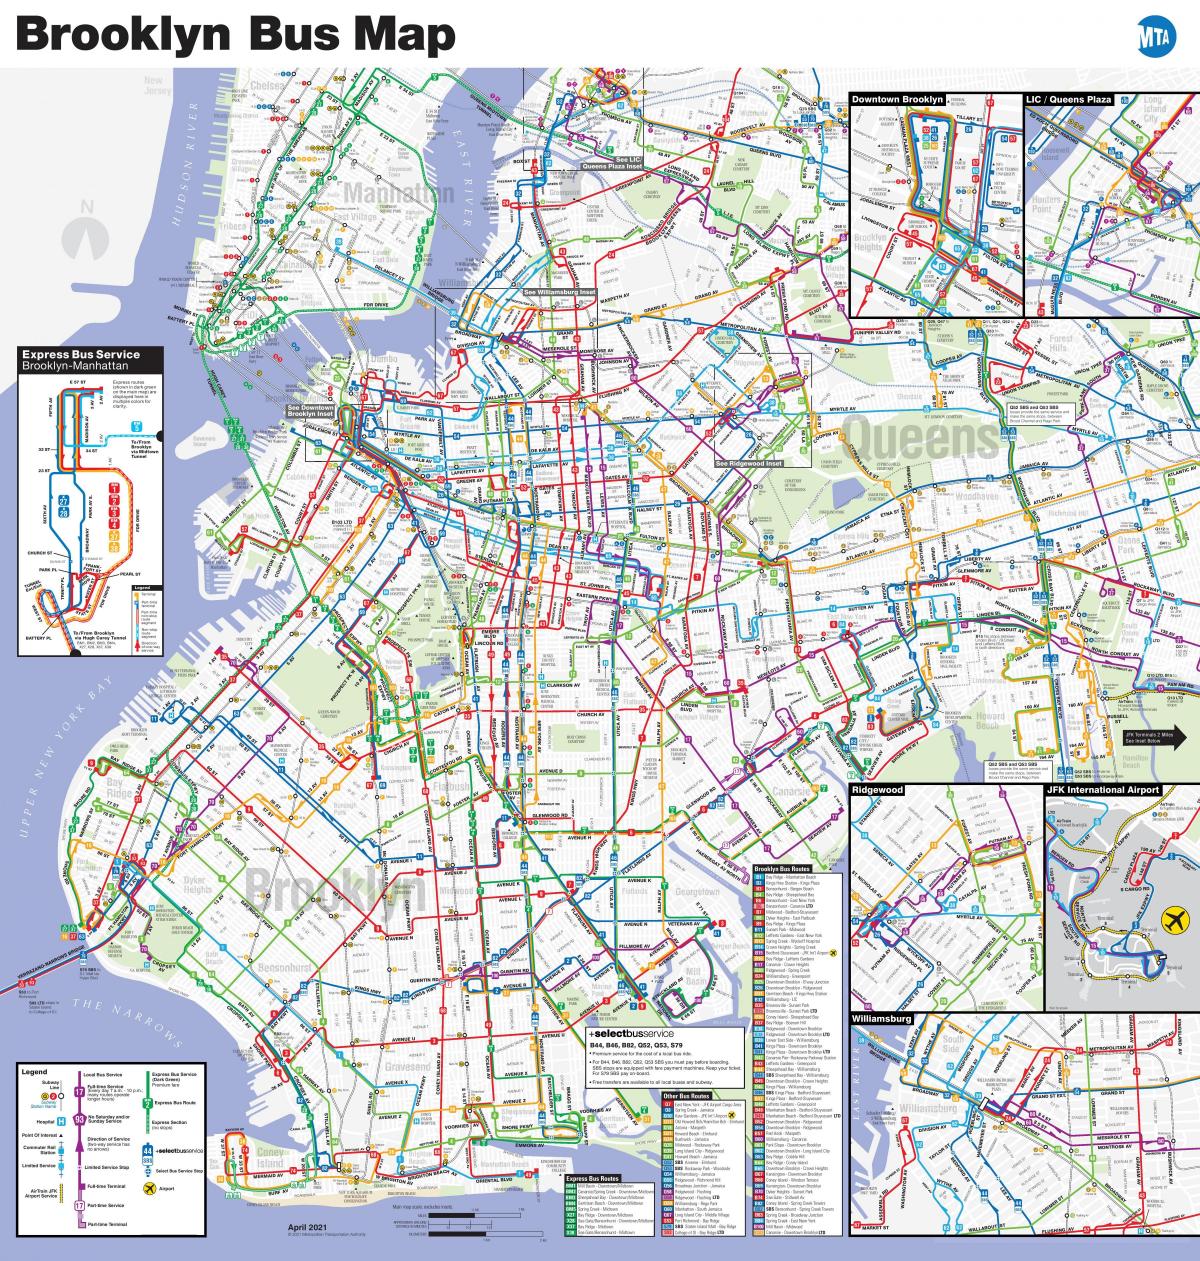 Plan des stations bus de Brooklyn